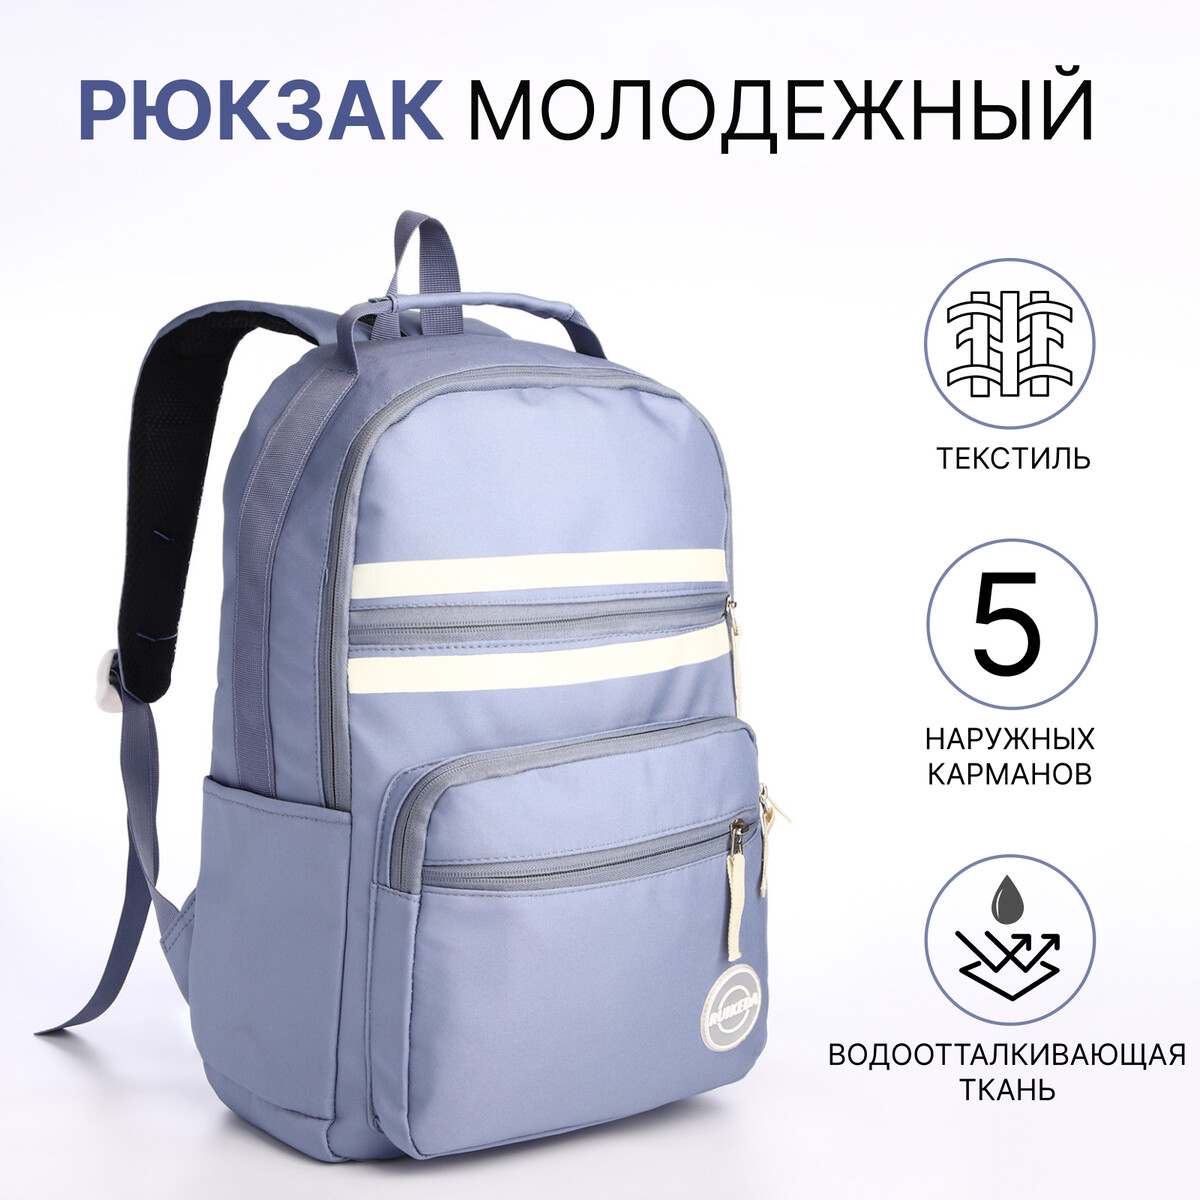 Рюкзак молодежный из текстиля на молнии, 5 карманов, цвет синий